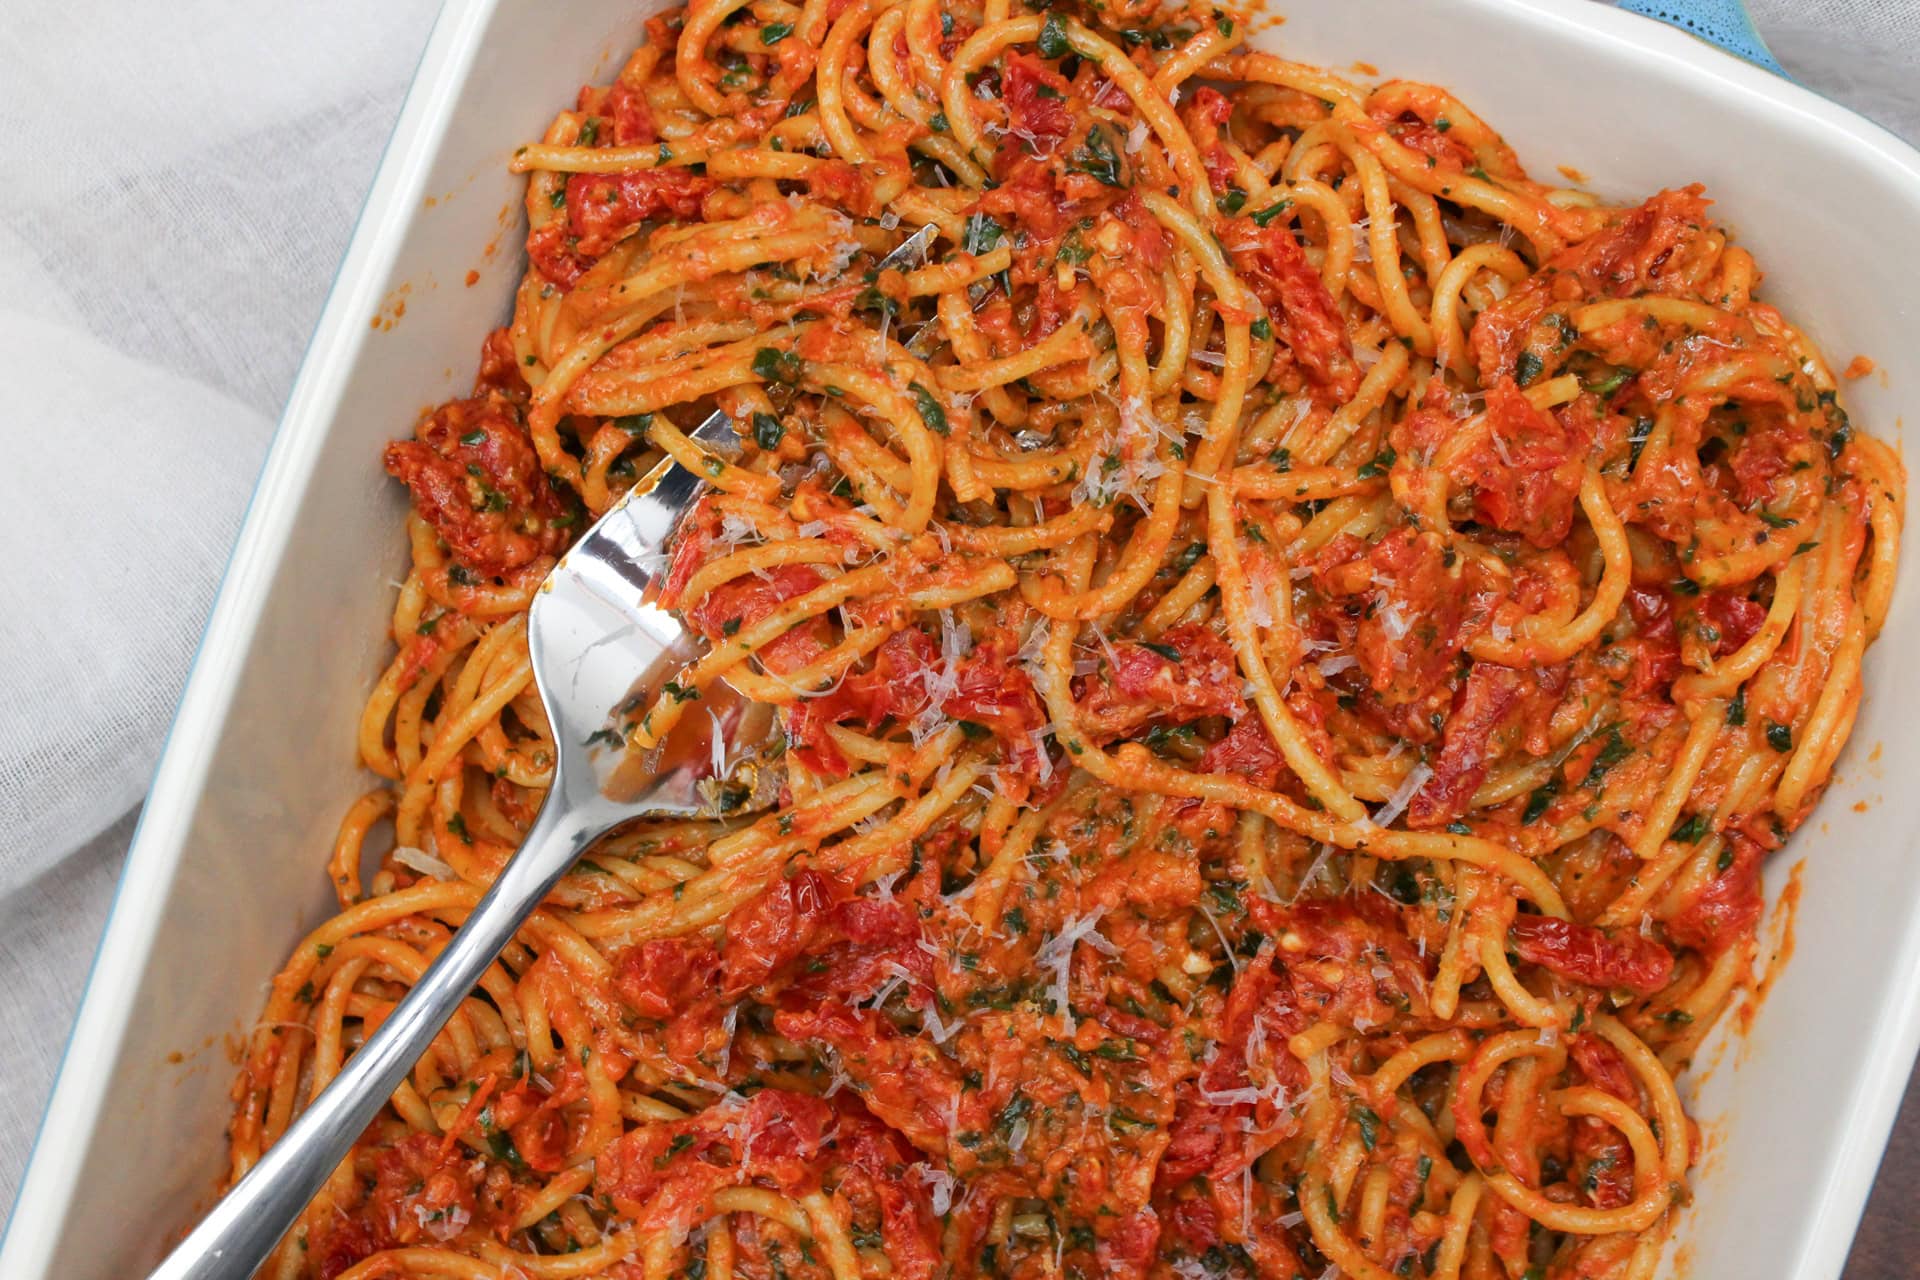 Spaghetti bake in a serving dish.